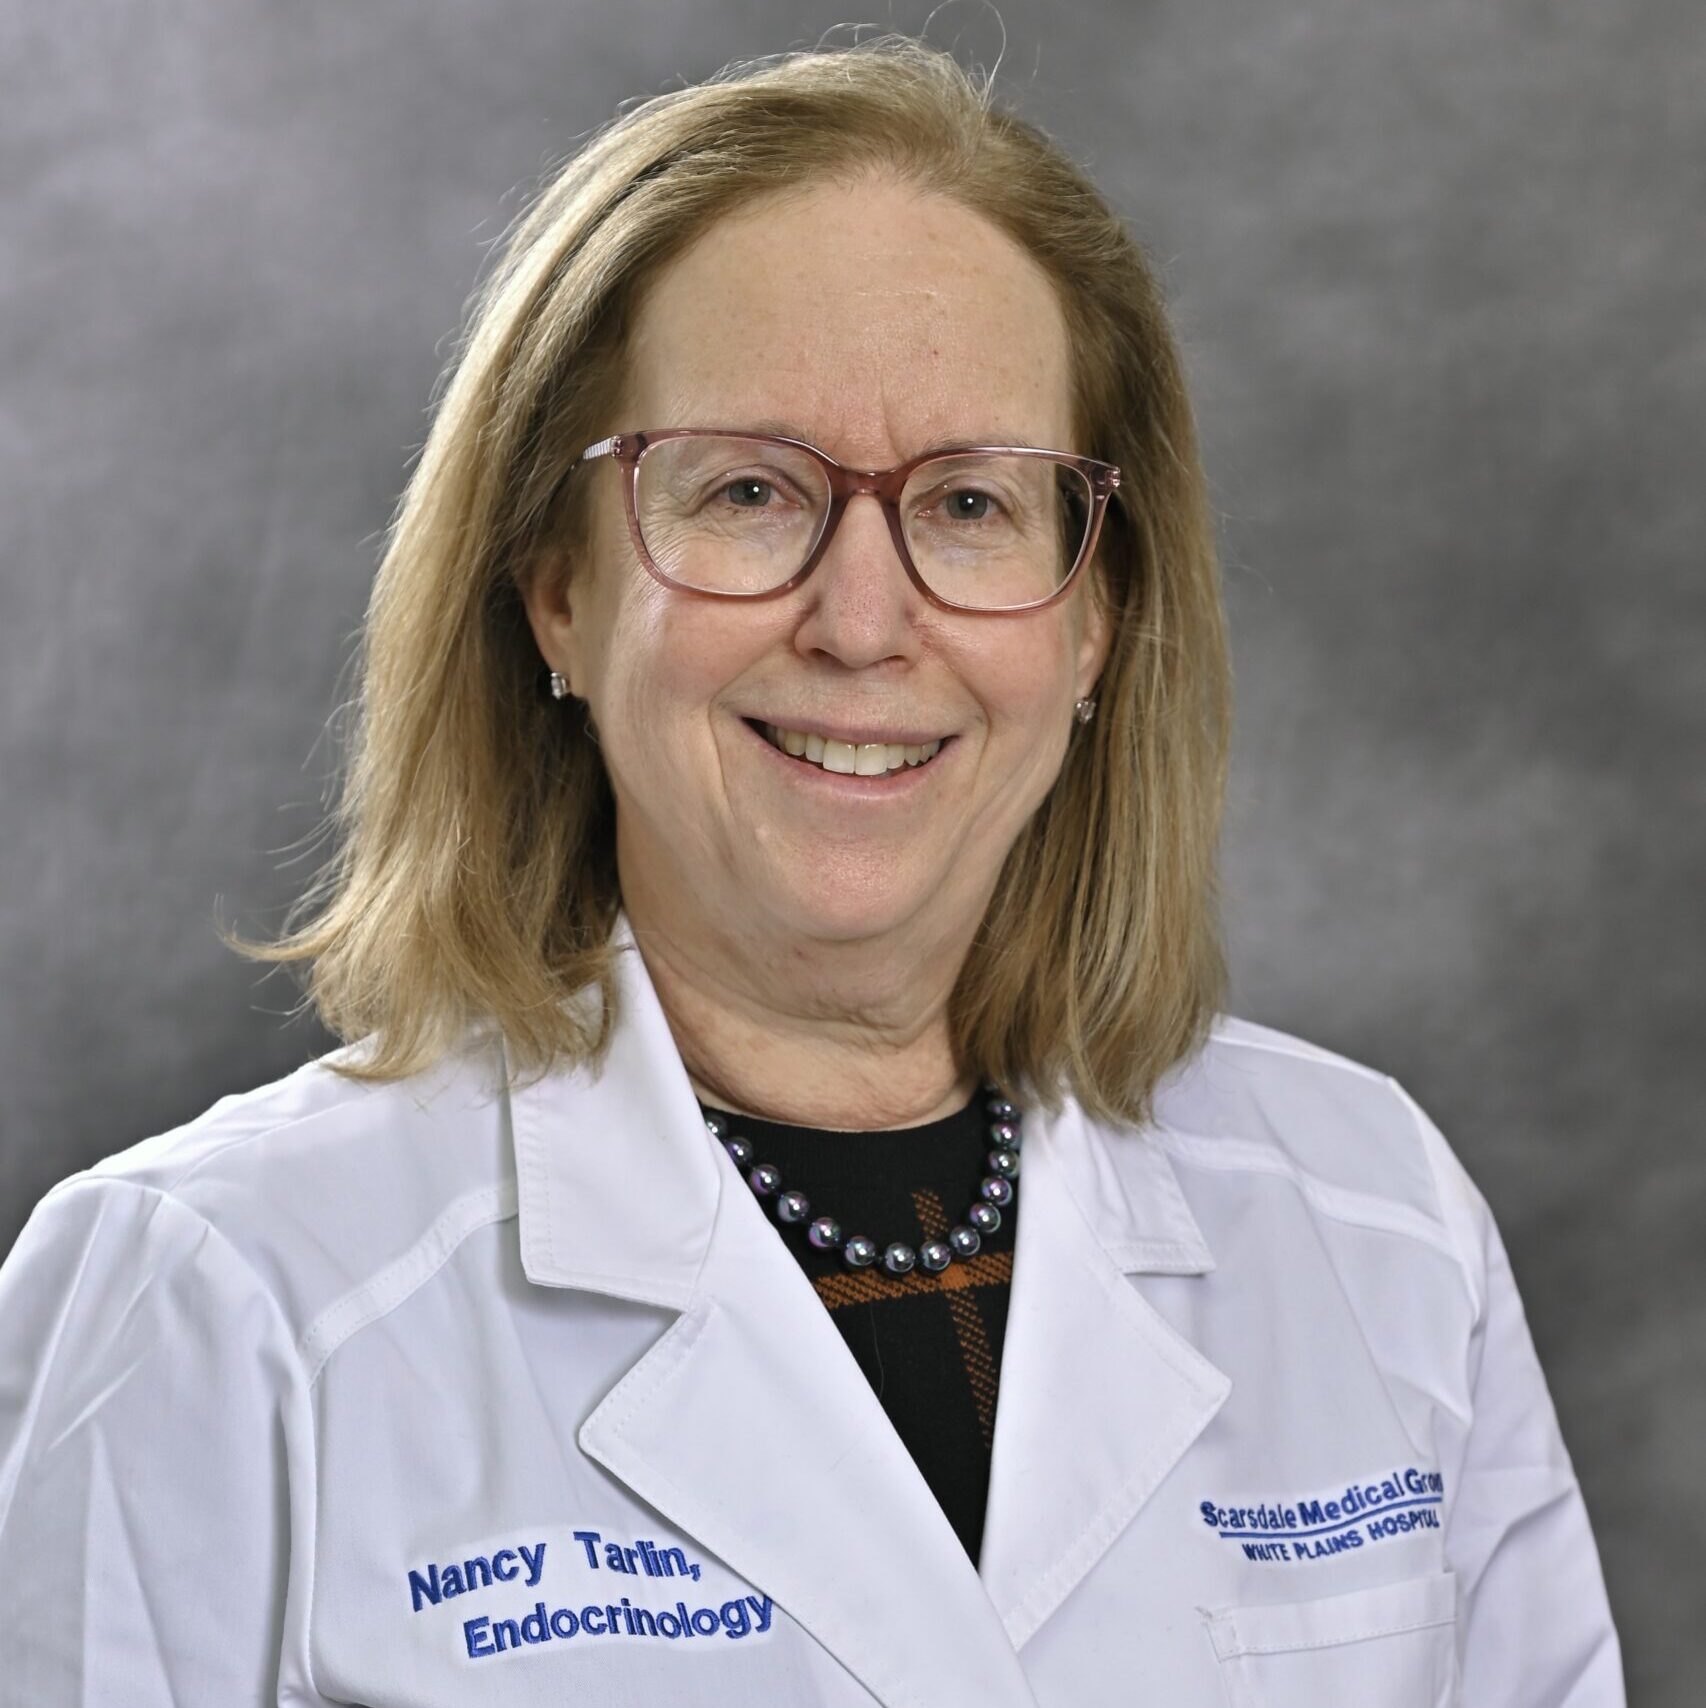 Nancy Tarlin, MD